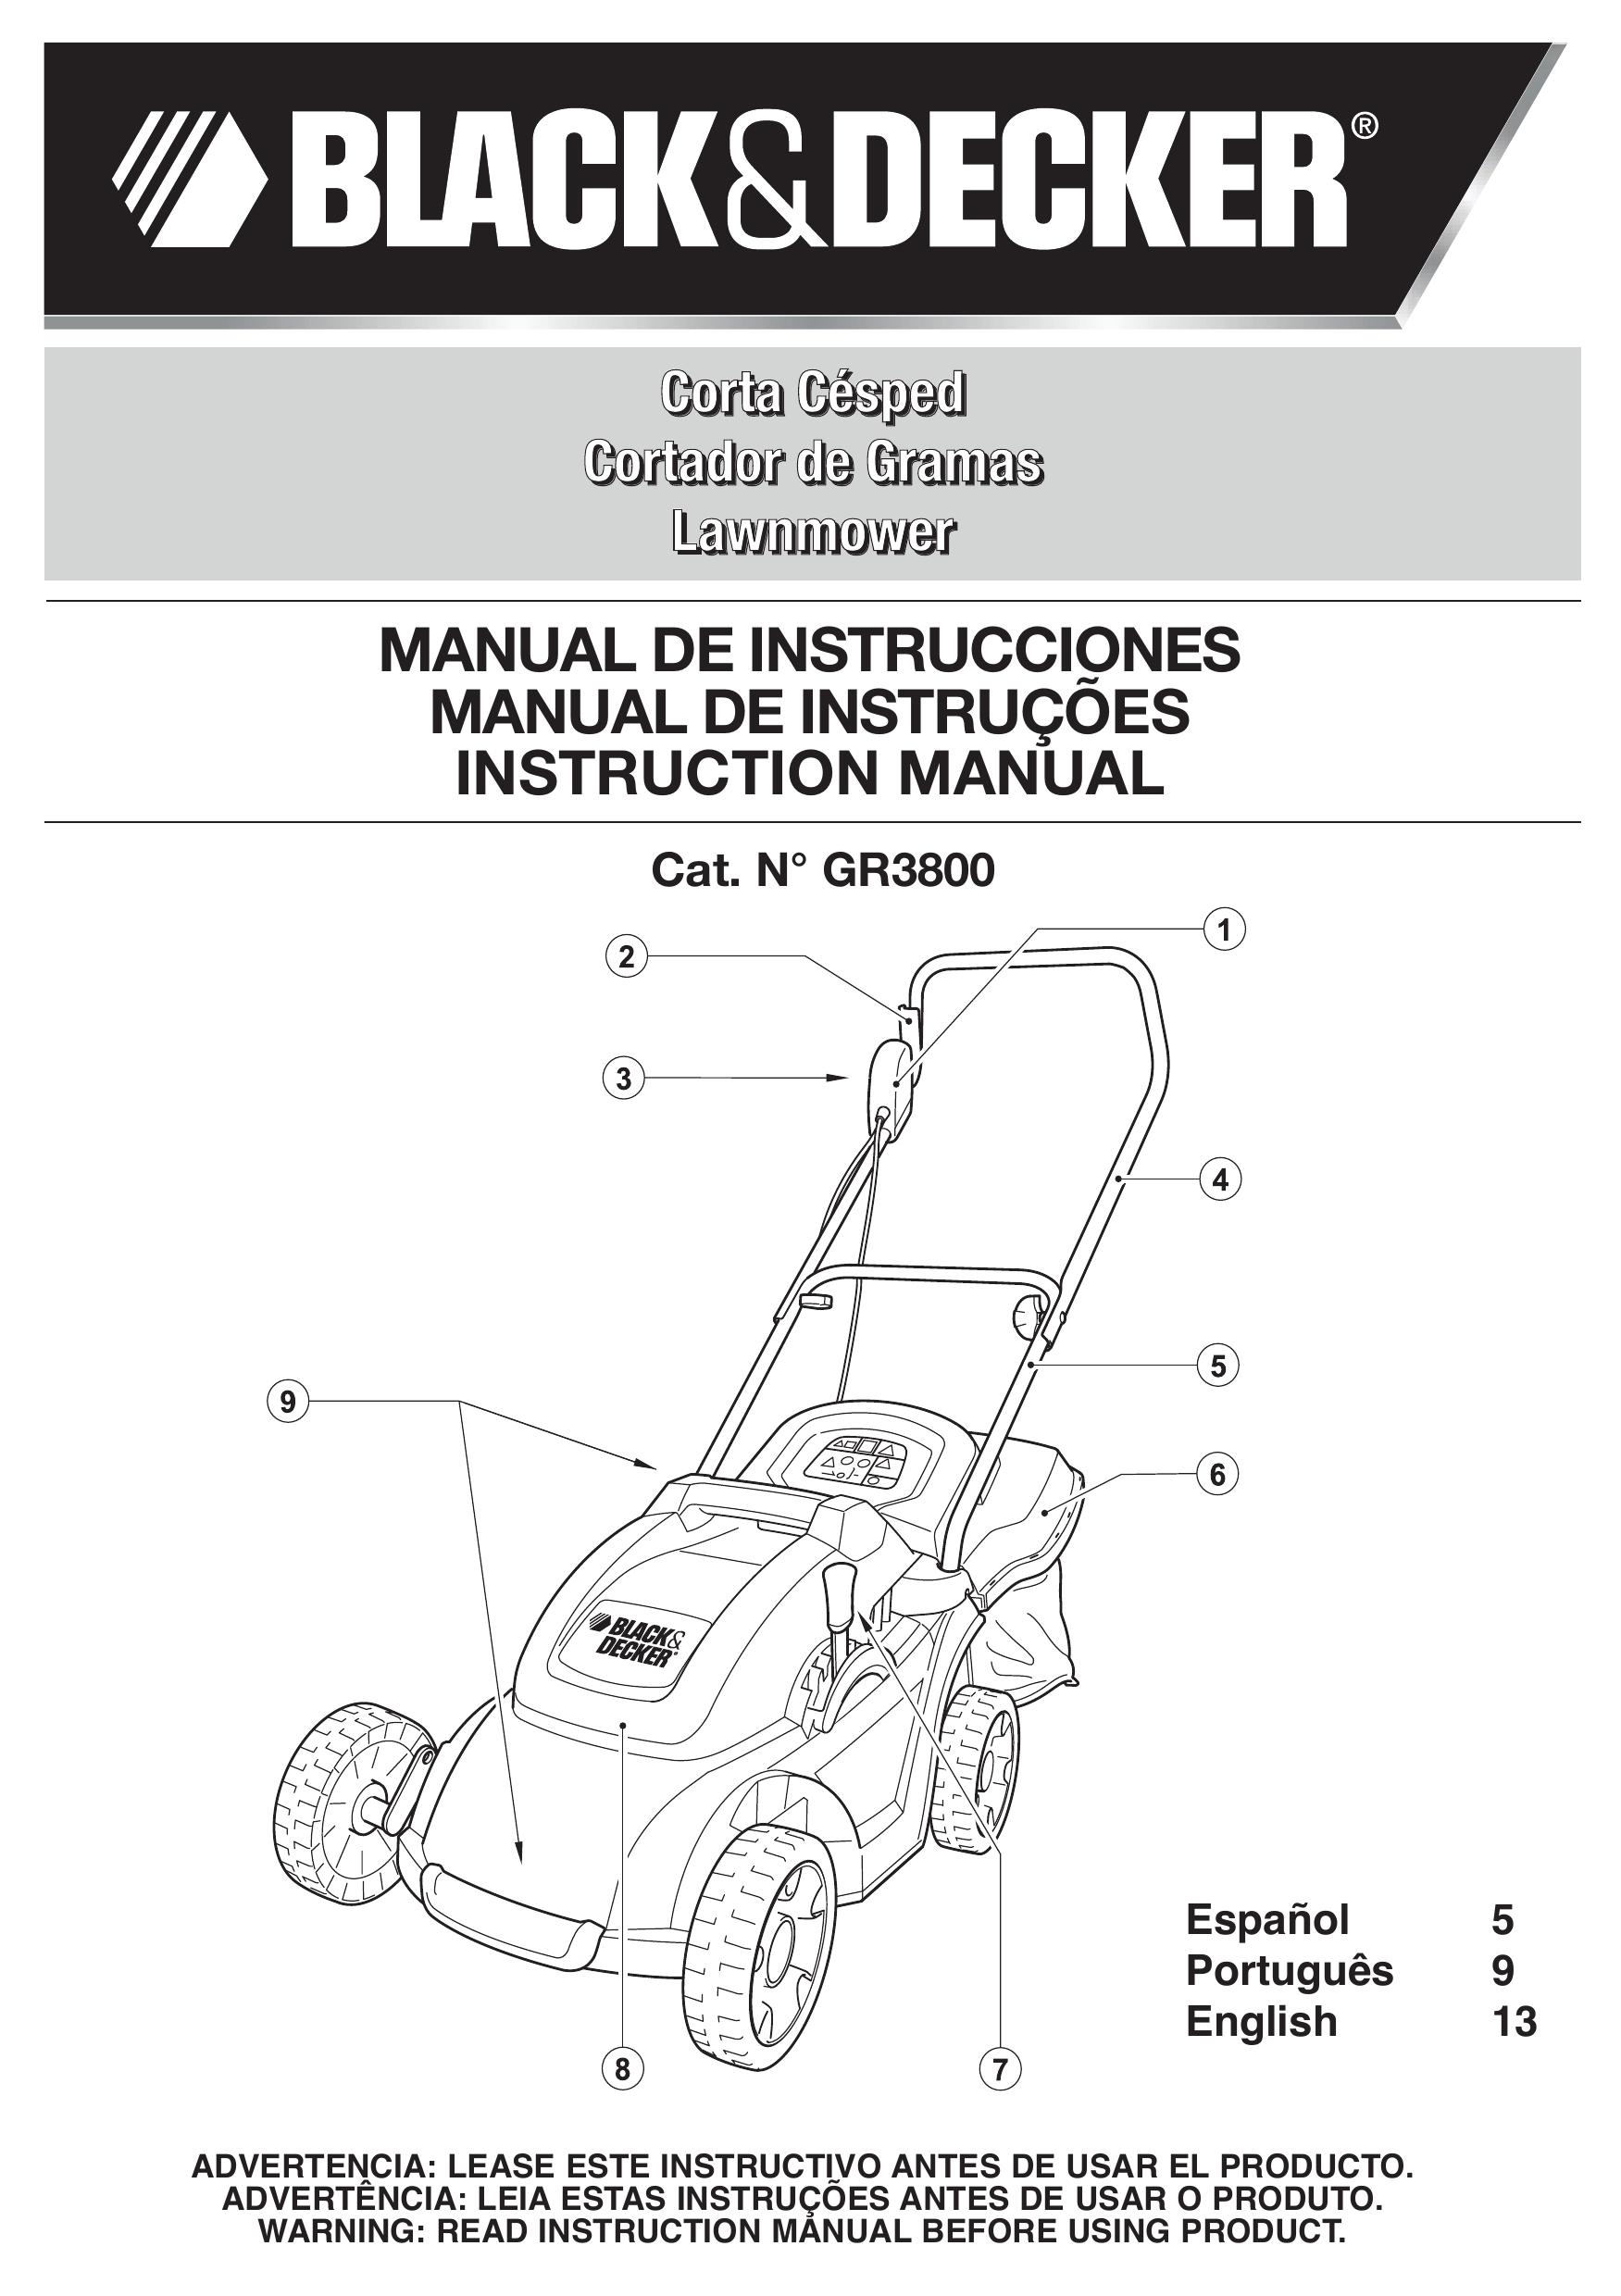 Black & Decker GR3800 Lawn Mower User Manual